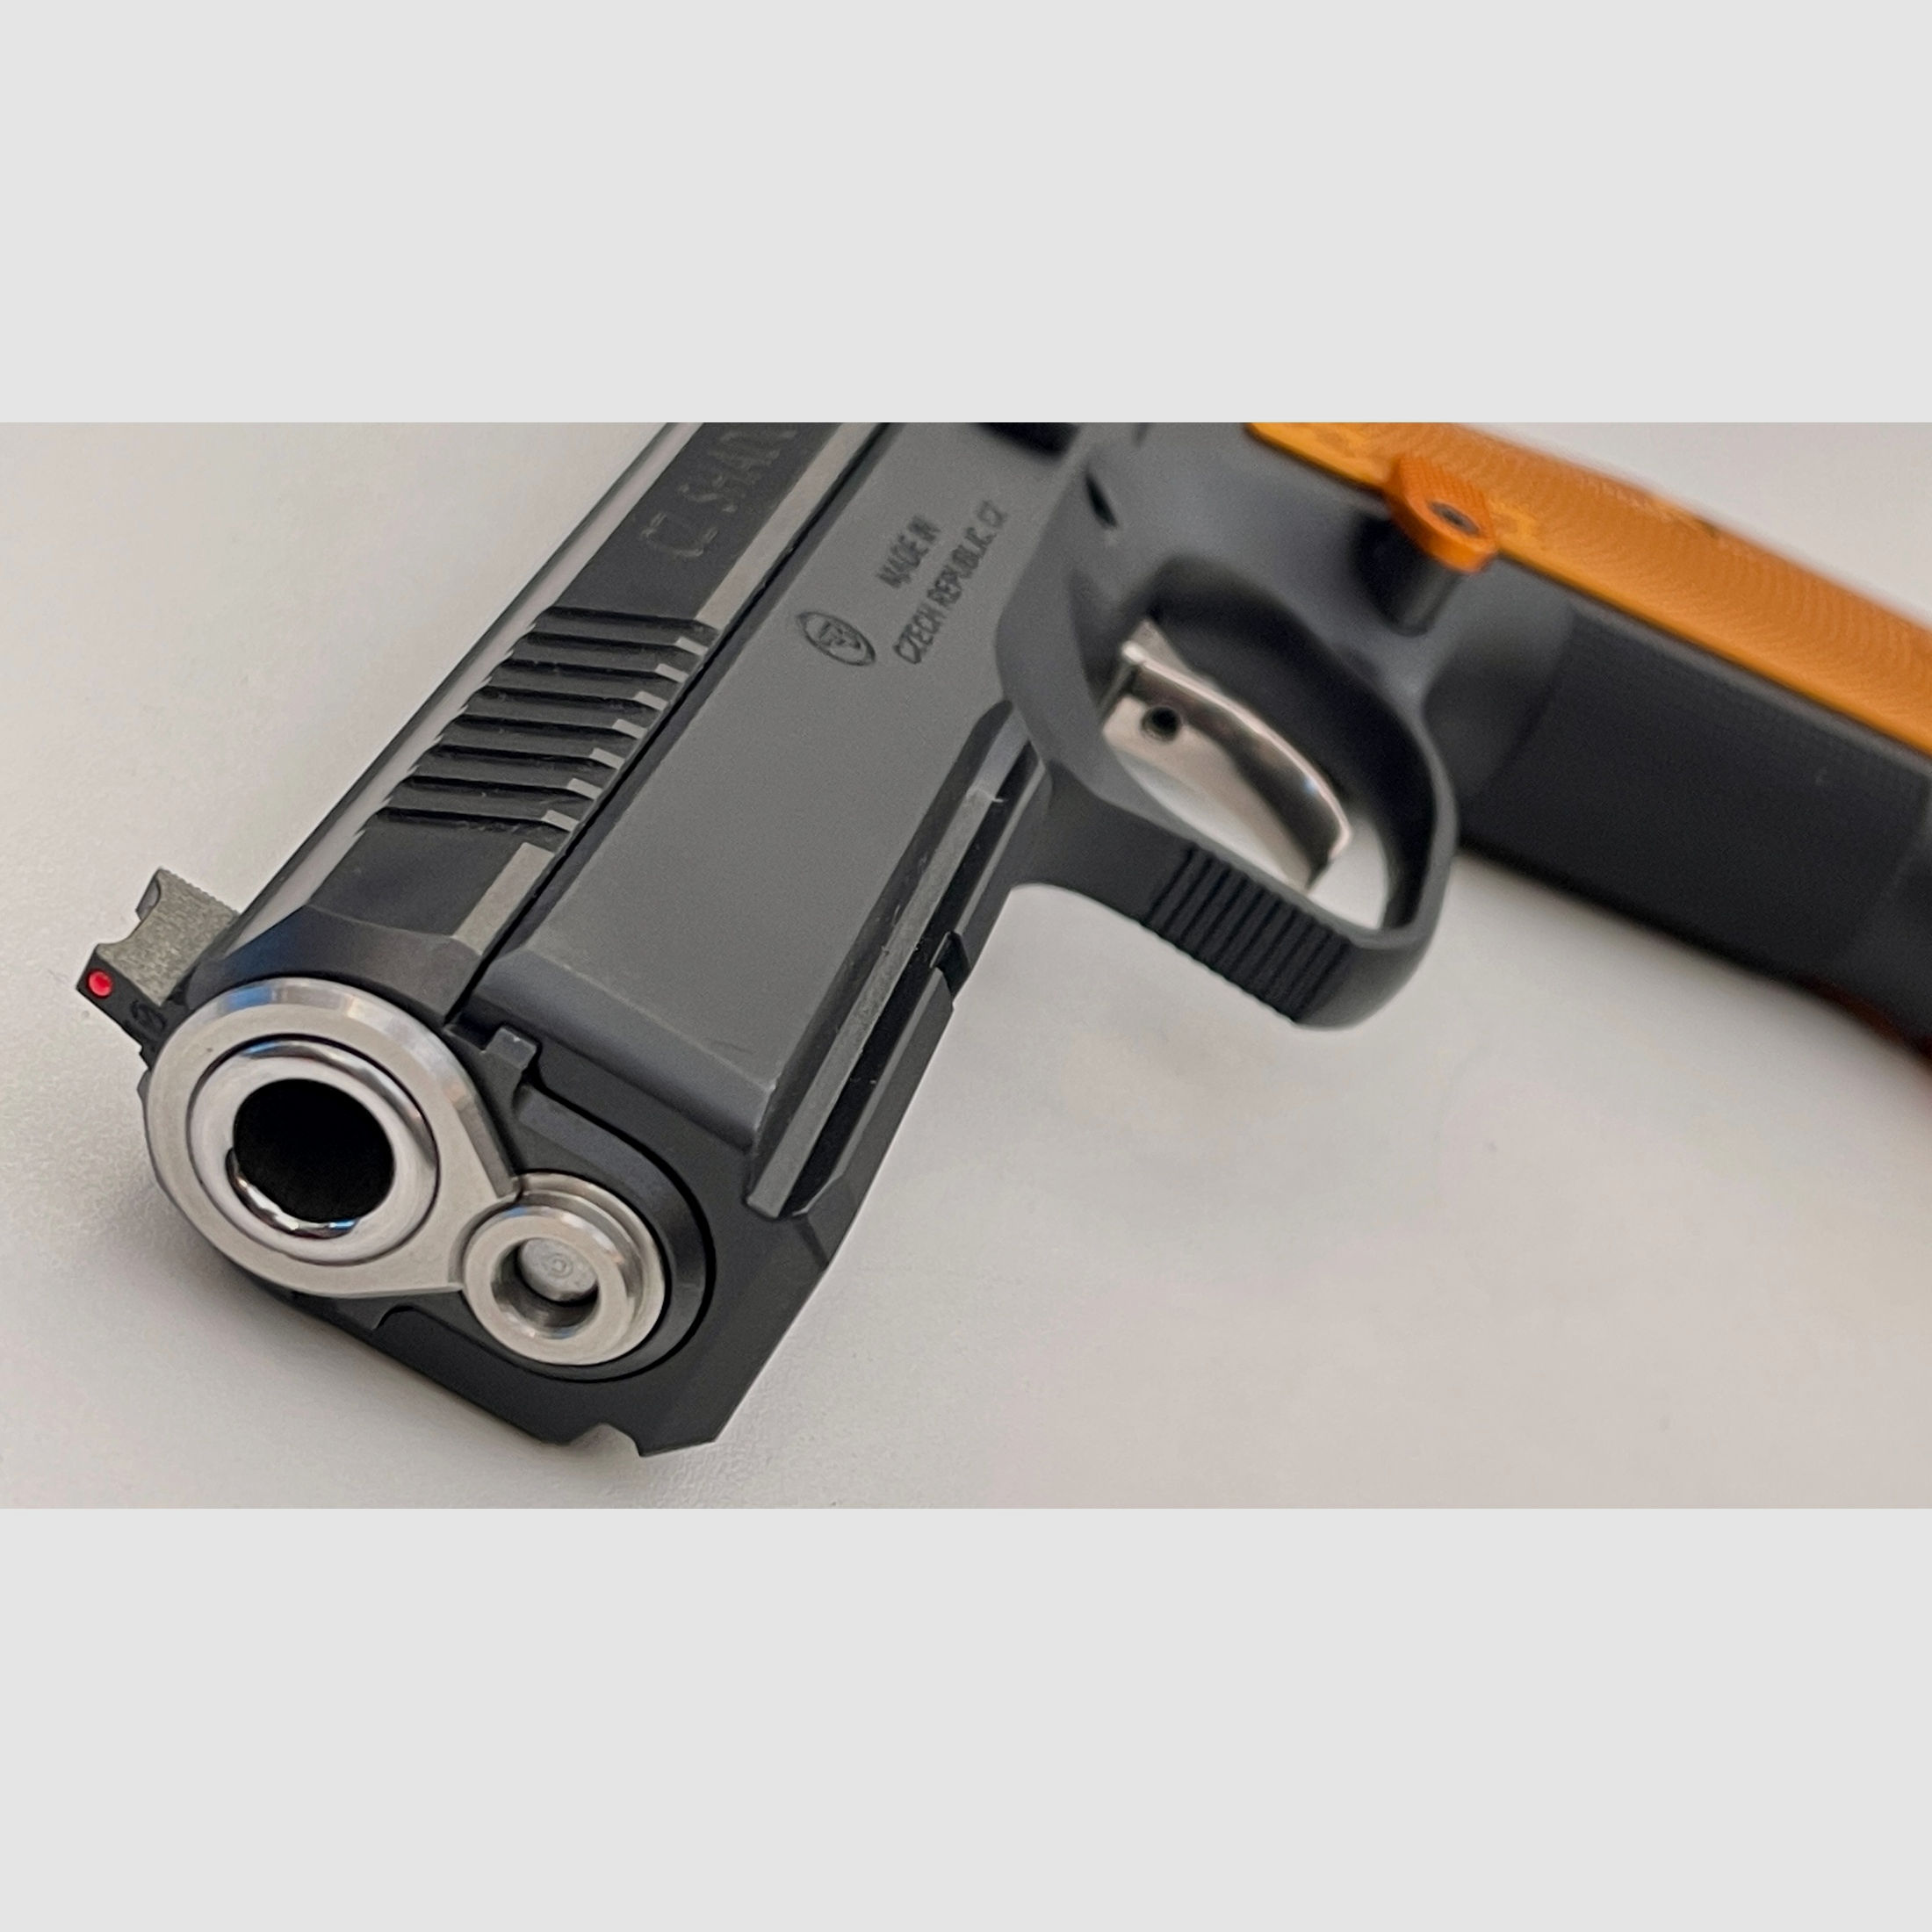 CZ SHADOW 2 Orange NEU  9mm Luger